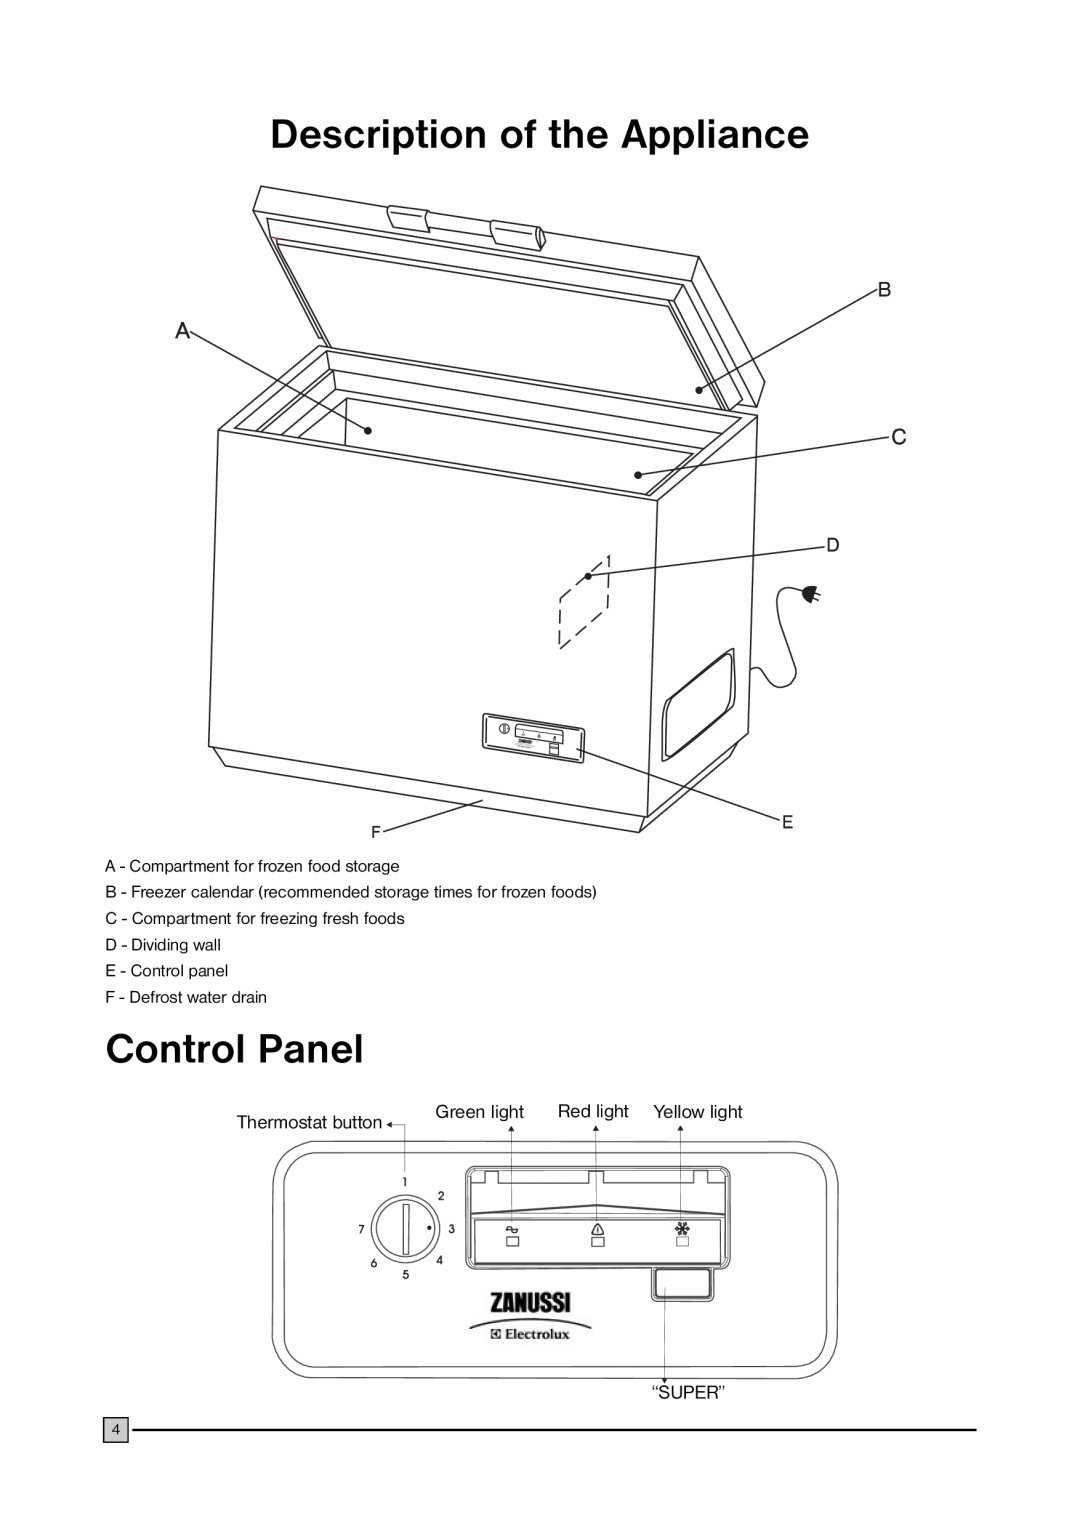 Zanussi ZFC 177 C installation manual Description of the Appliance, Control Panel, Green light, Red light, “Super” 